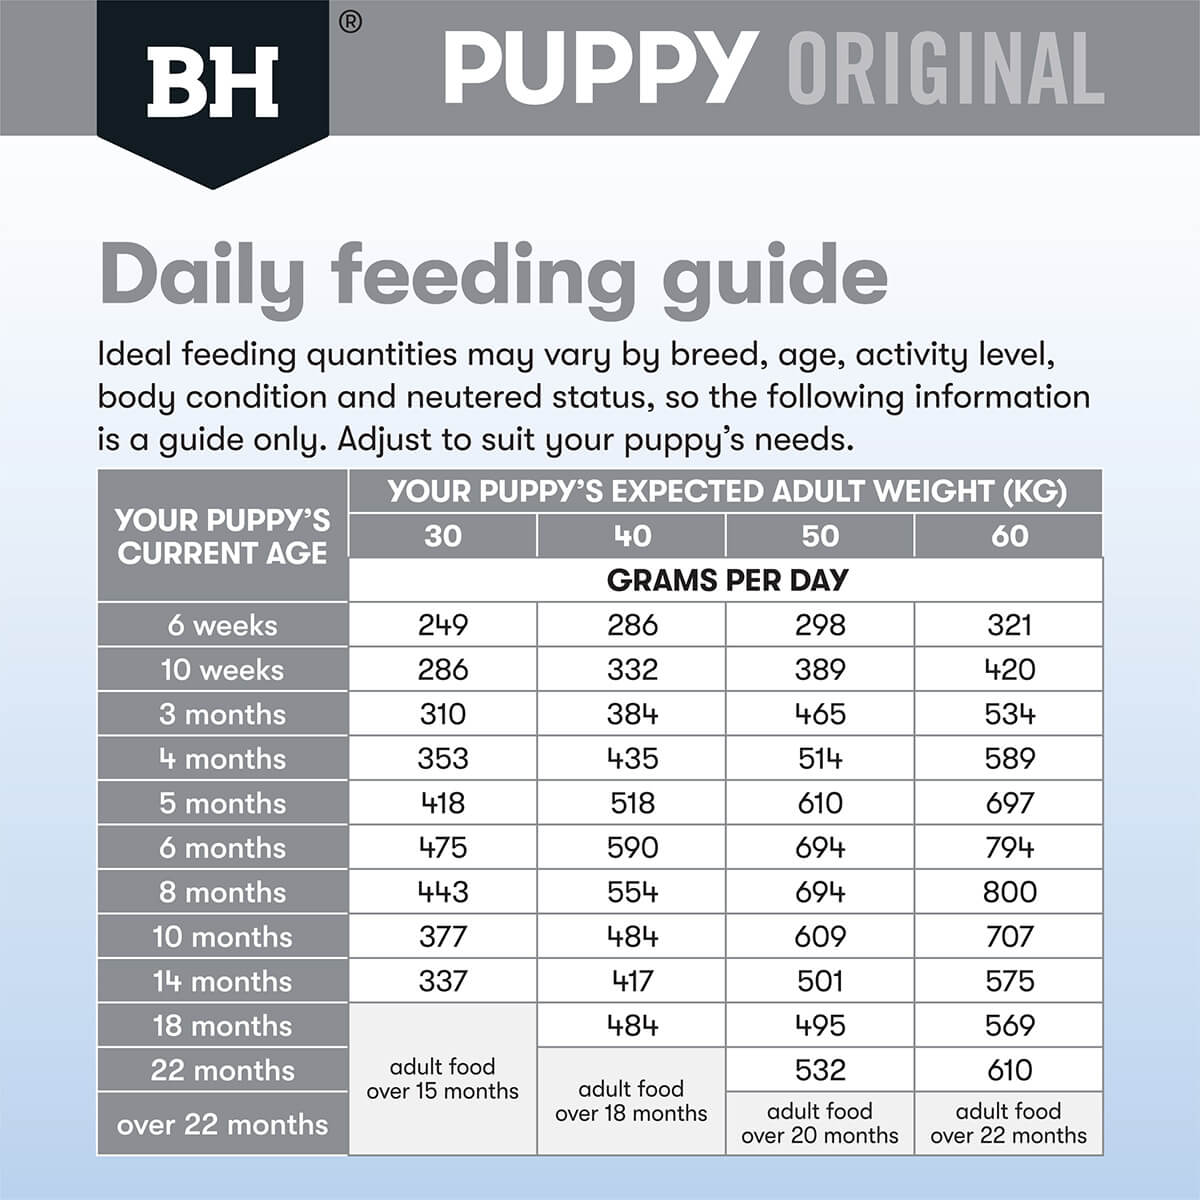 Black Hawk Puppy Chicken & Rice Large Breed Dog Food (100000079868) [default_color]